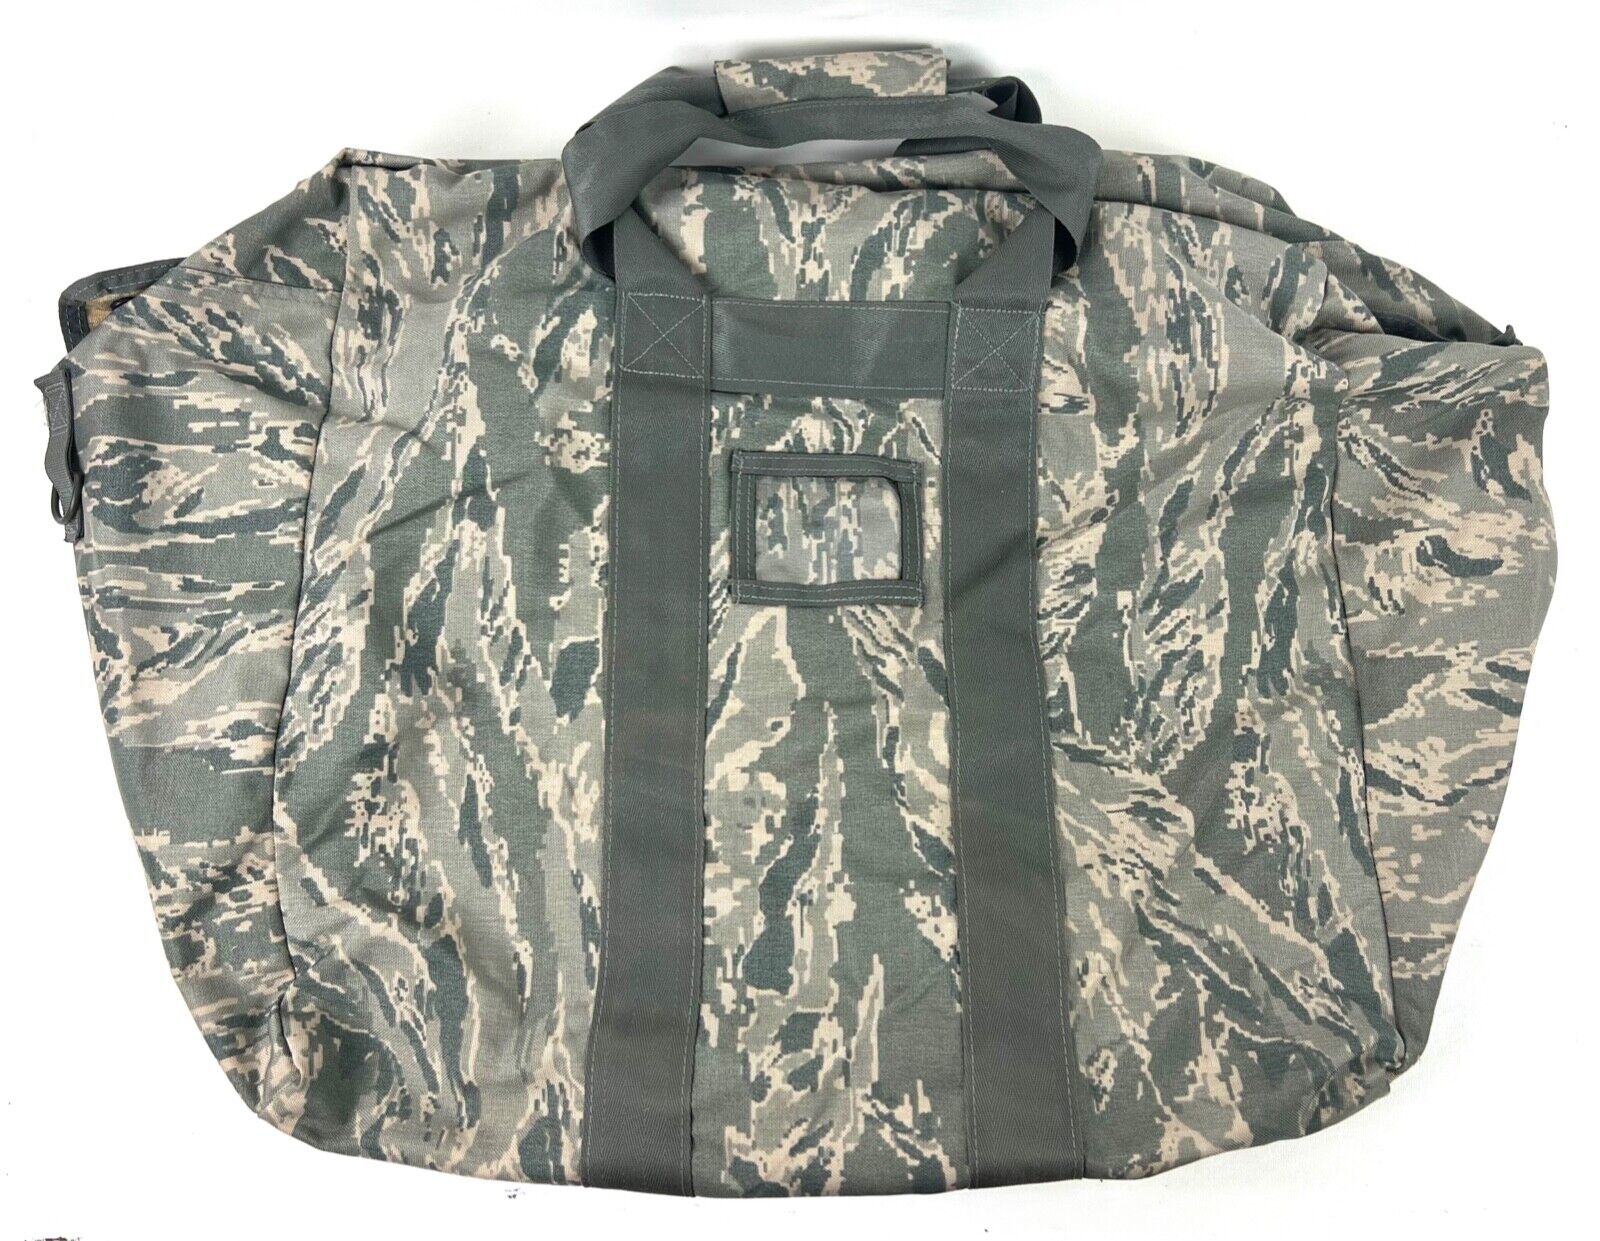 USAF Air Force Flyers Kit Bag ABU Tiger Stripe Camo Large Duffel